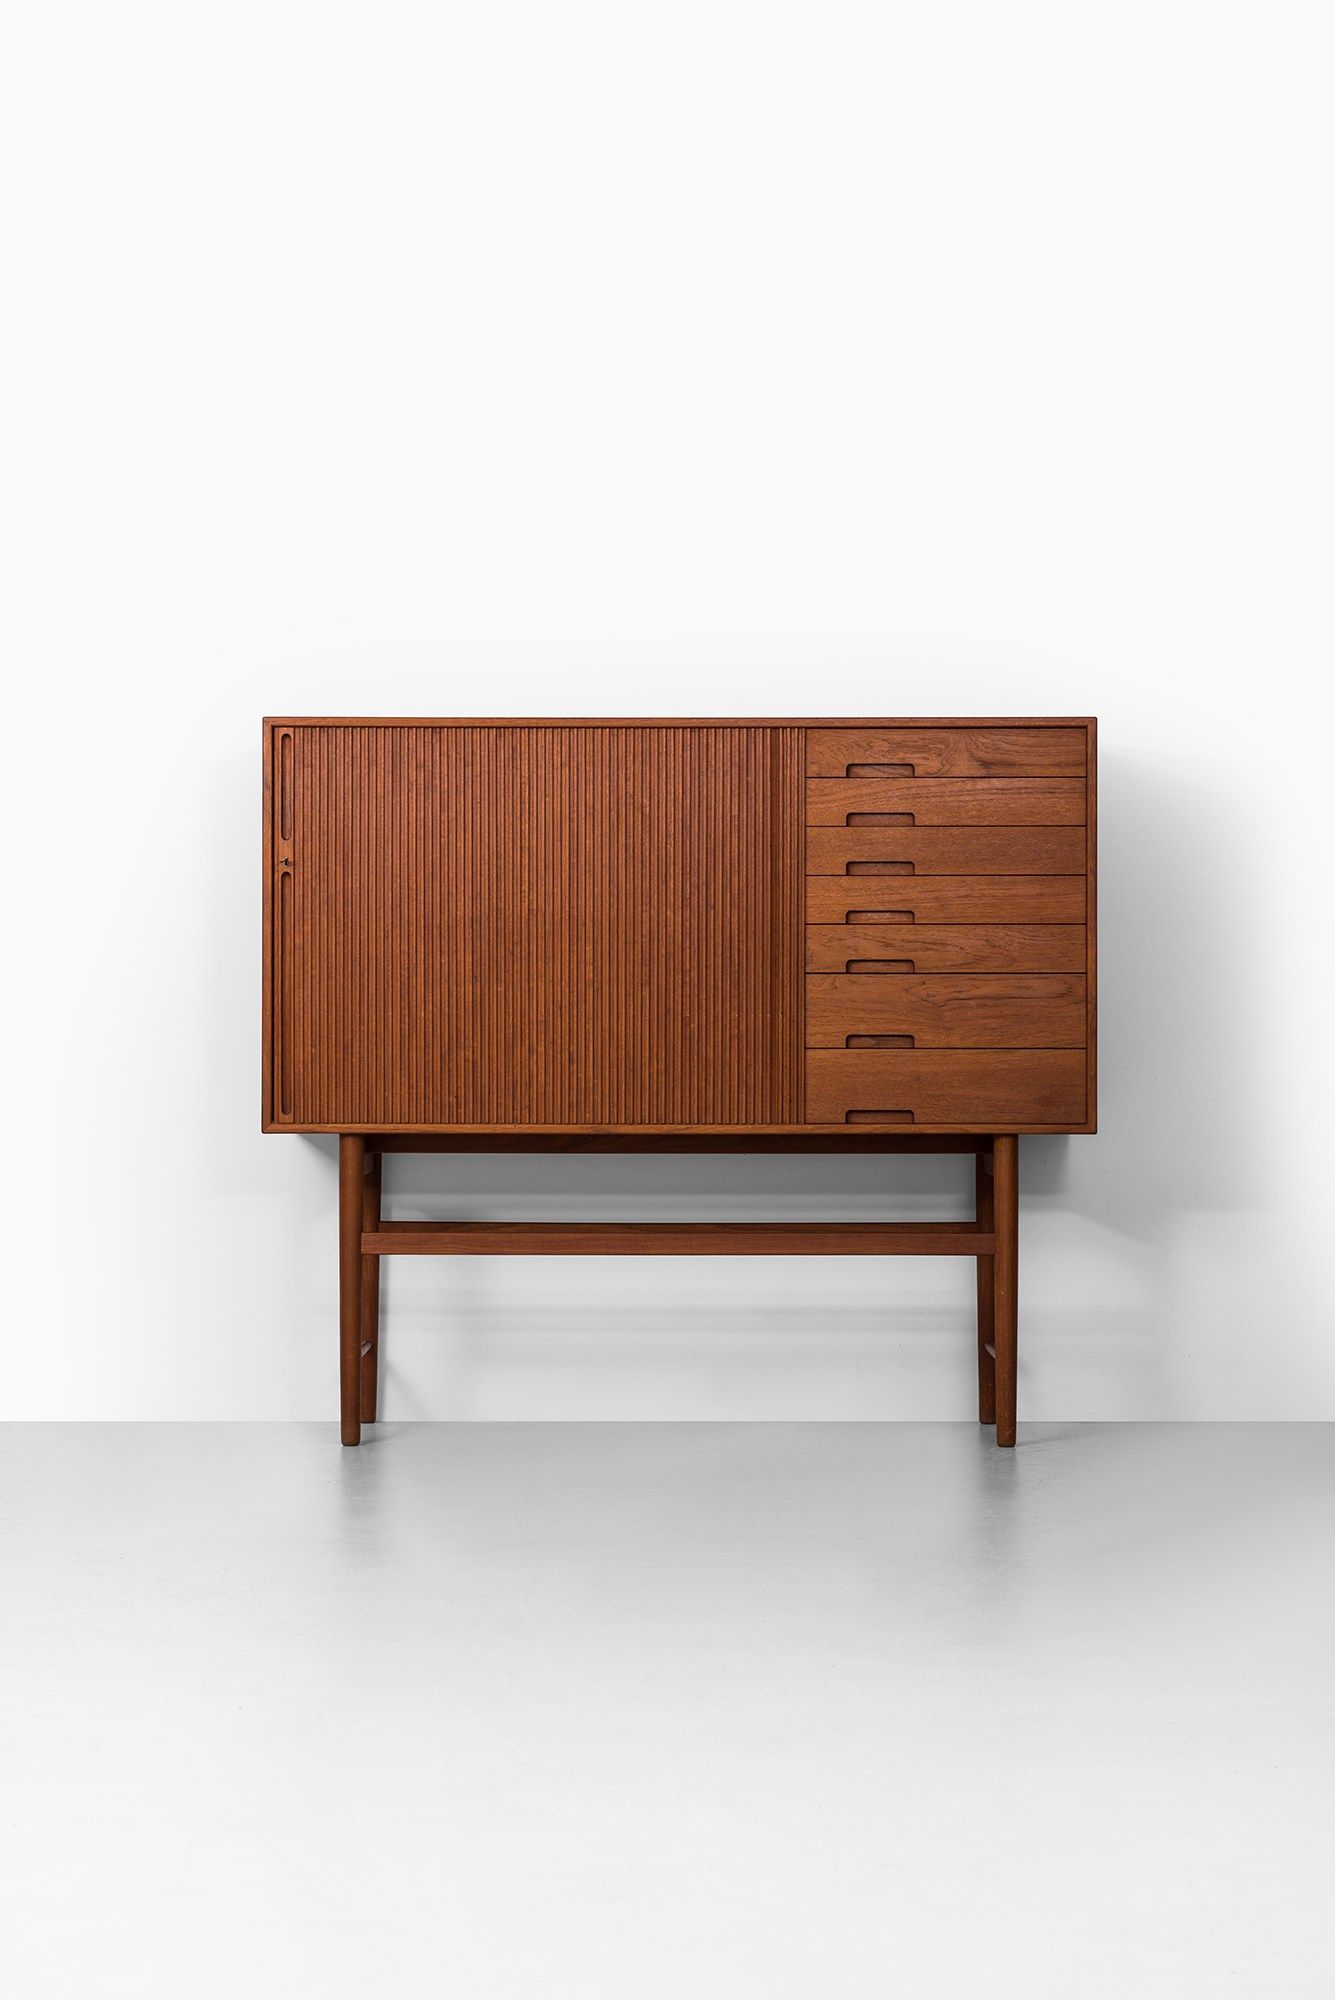 Mid-century modern furniture producer